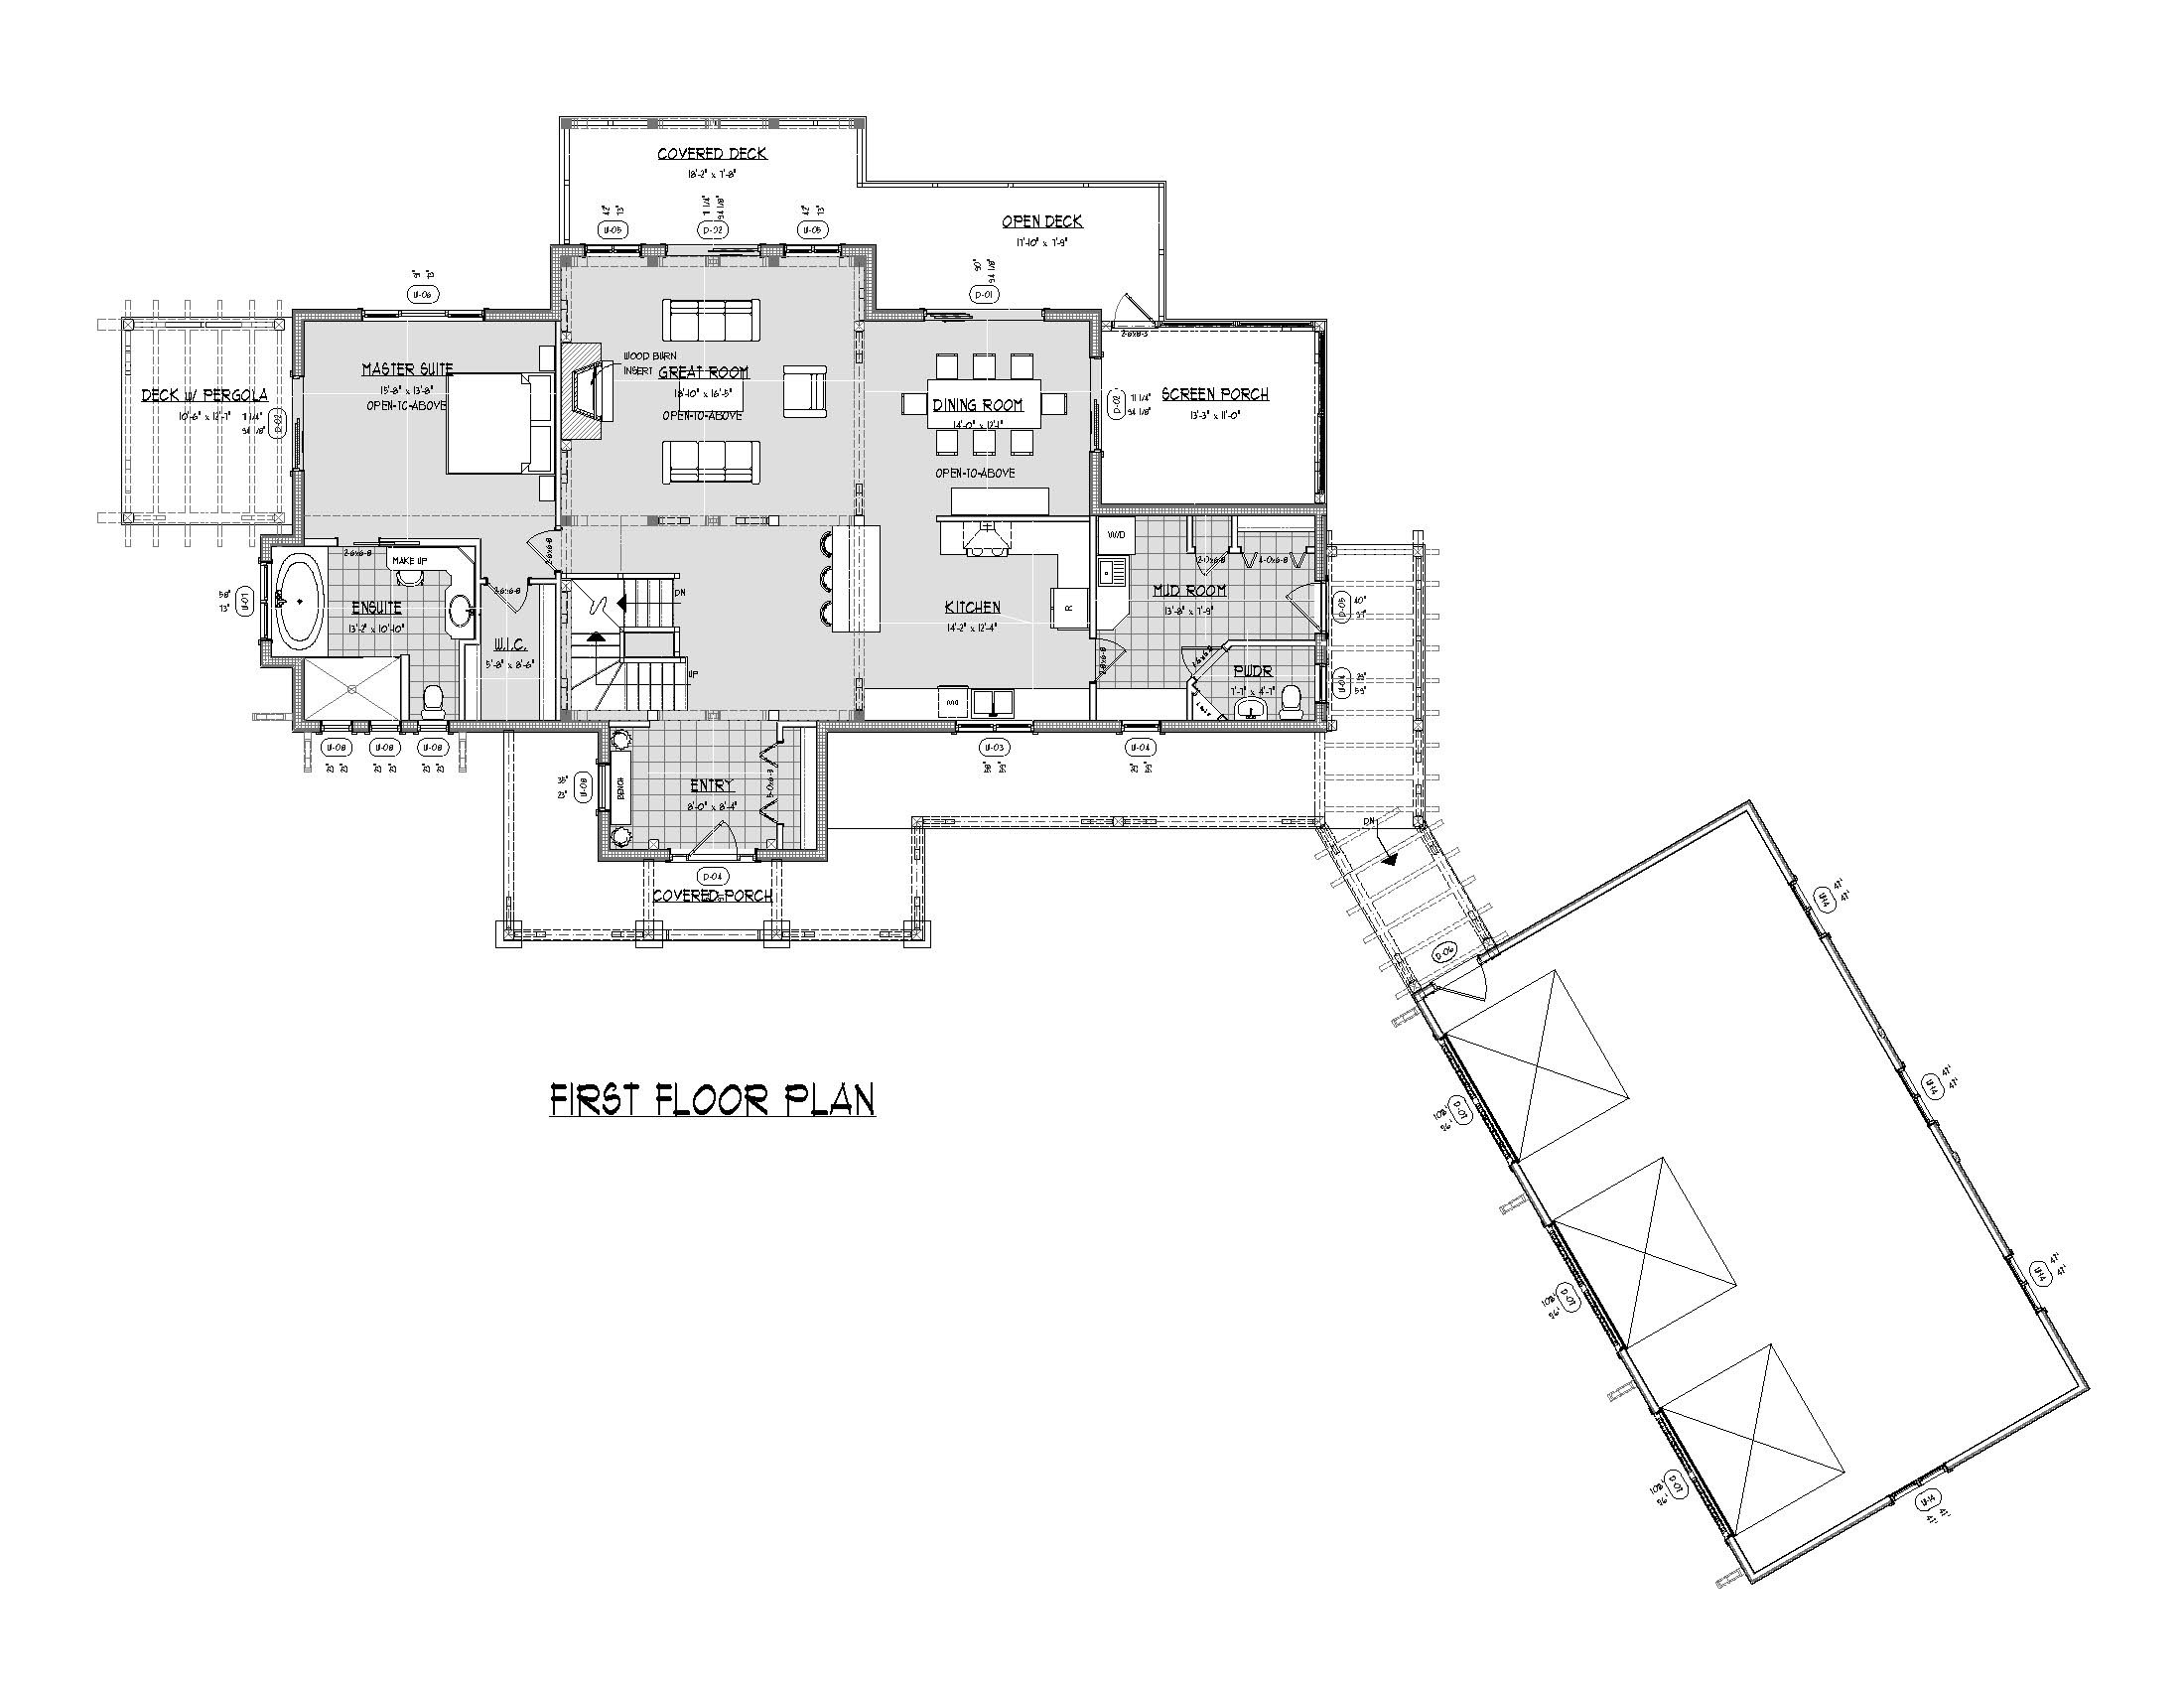 Galloway_First Floor Plan.jpg